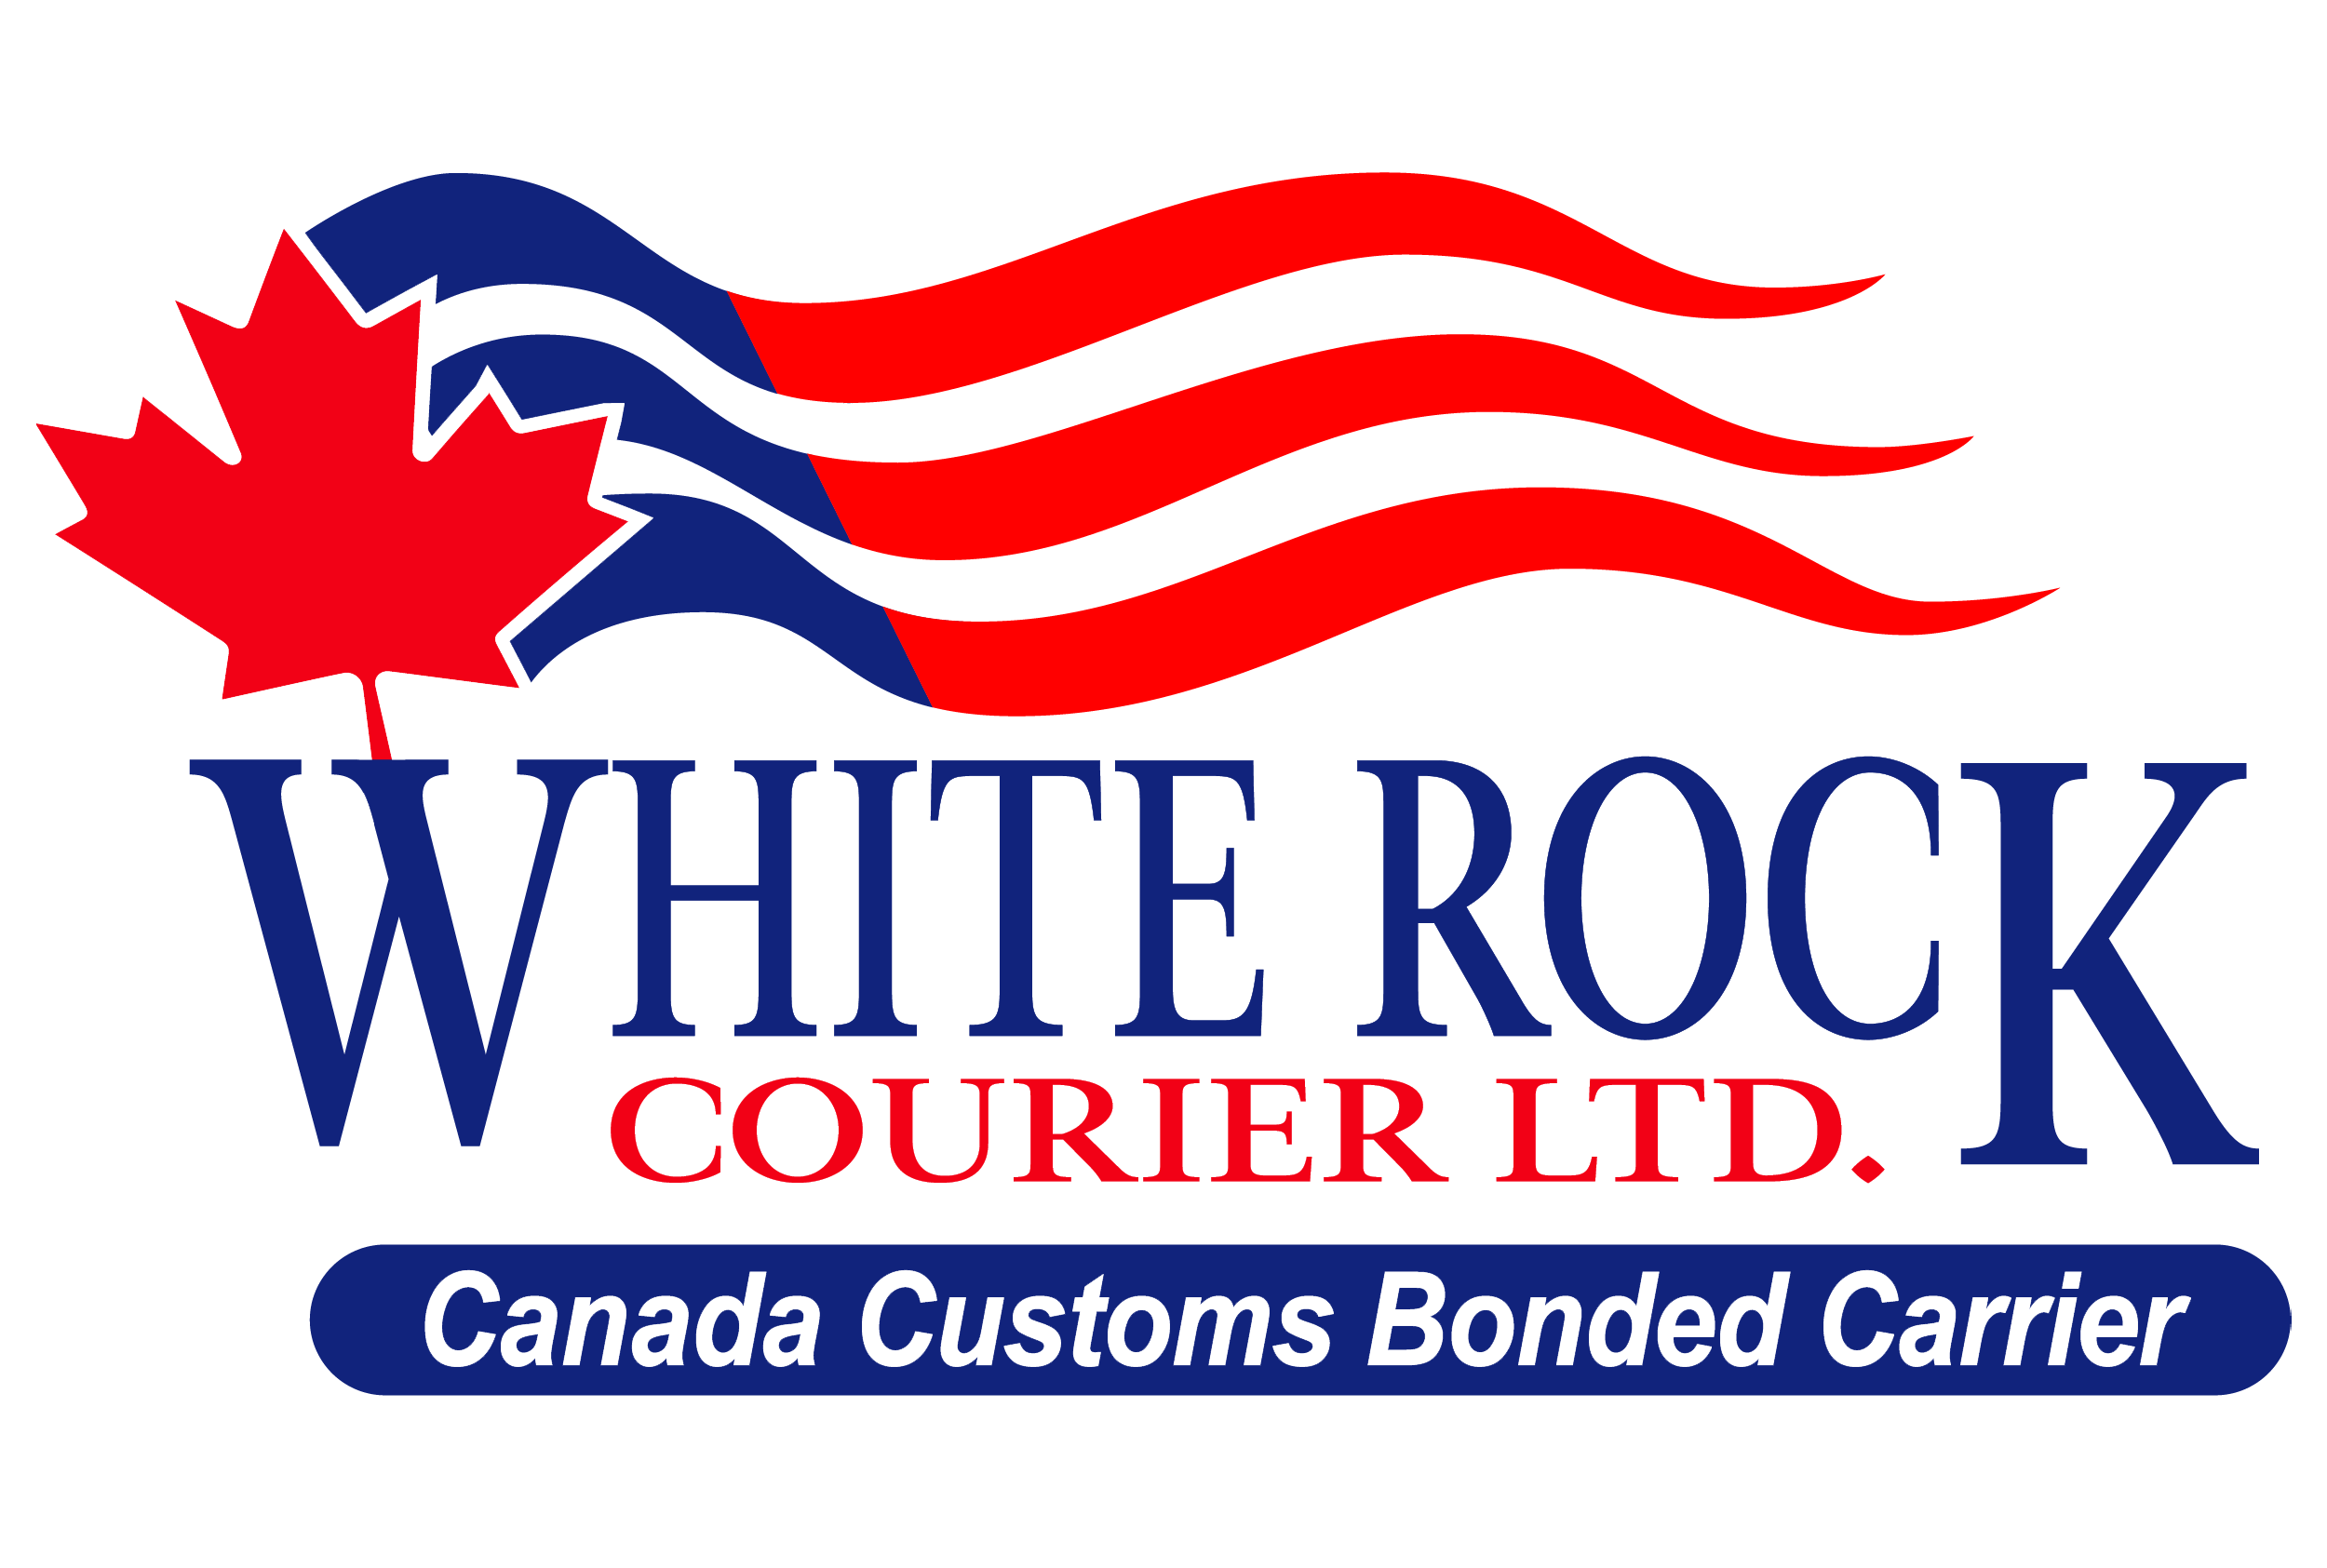 White Rock Courier Ltd